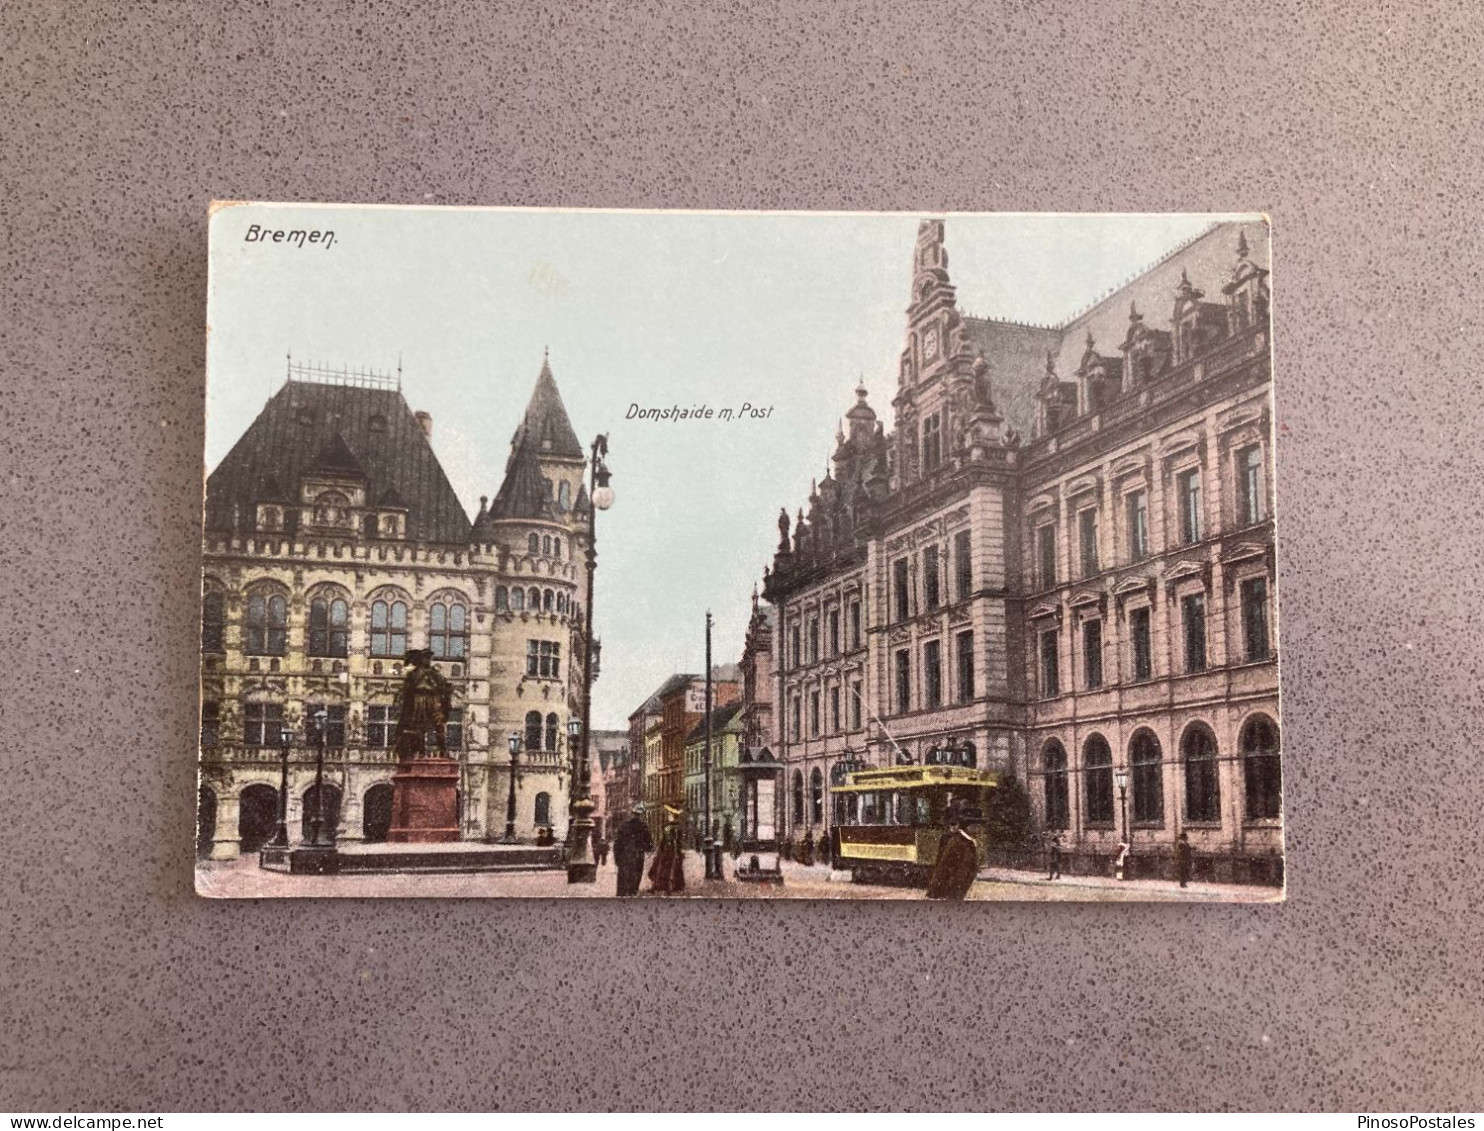 Bremen Domshaide Mit Post Carte Postale Postcard - Bremen